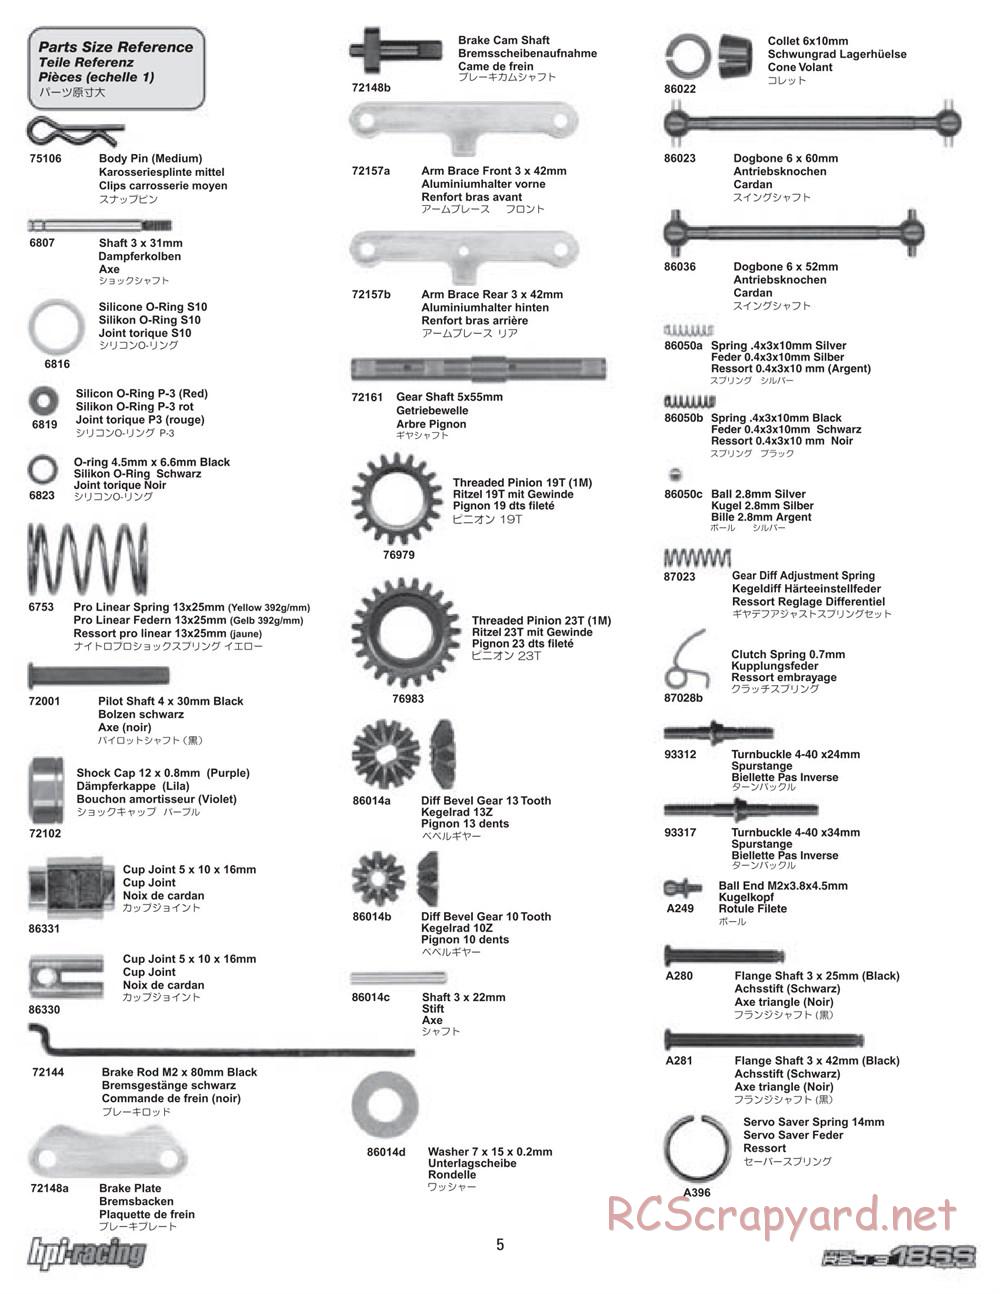 HPI - Nitro RS4 3 18SS - Manual - Page 5